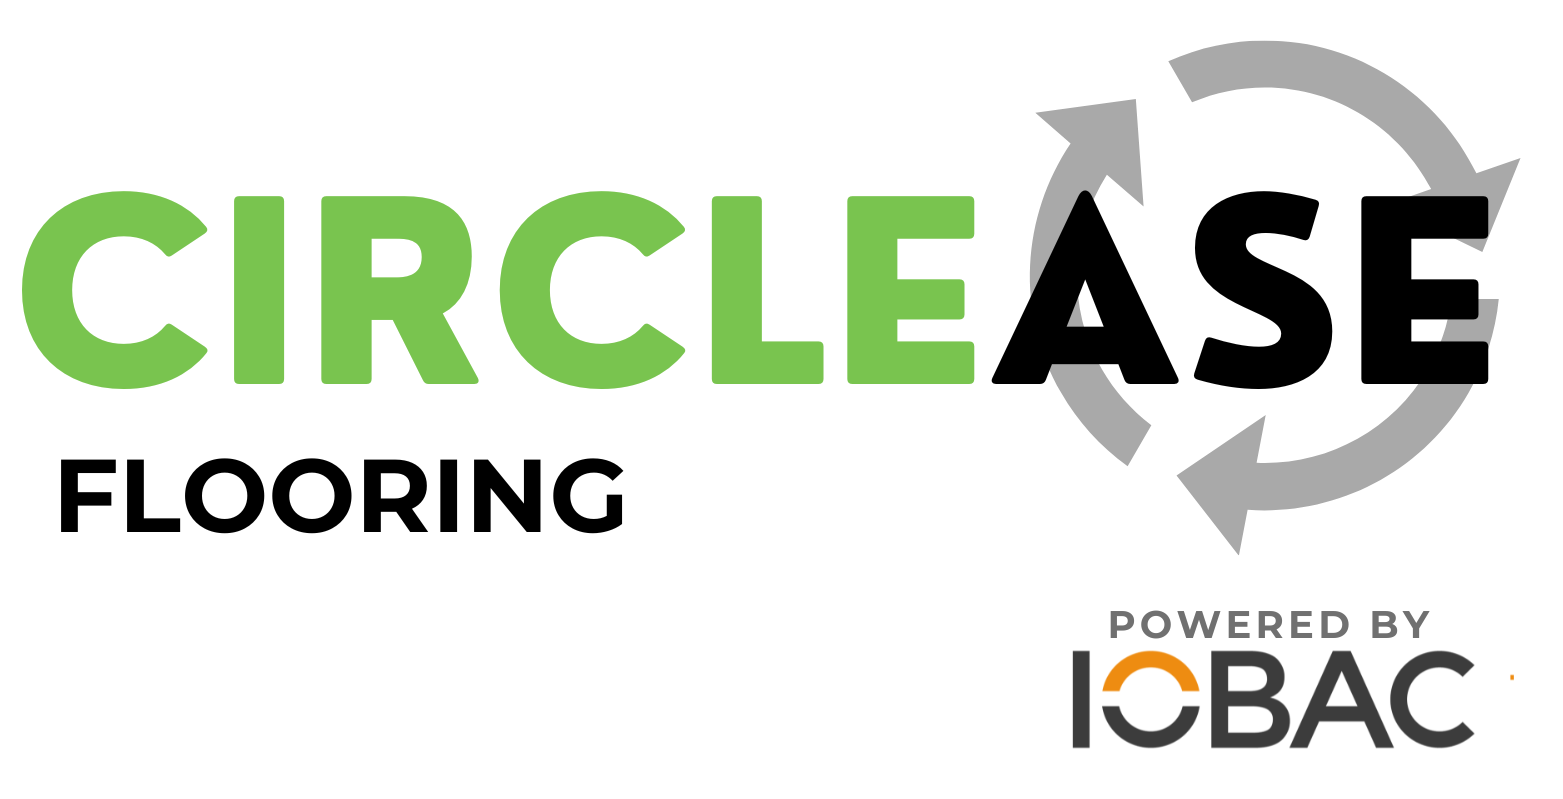 Circlease logo - Powered by IOBAC